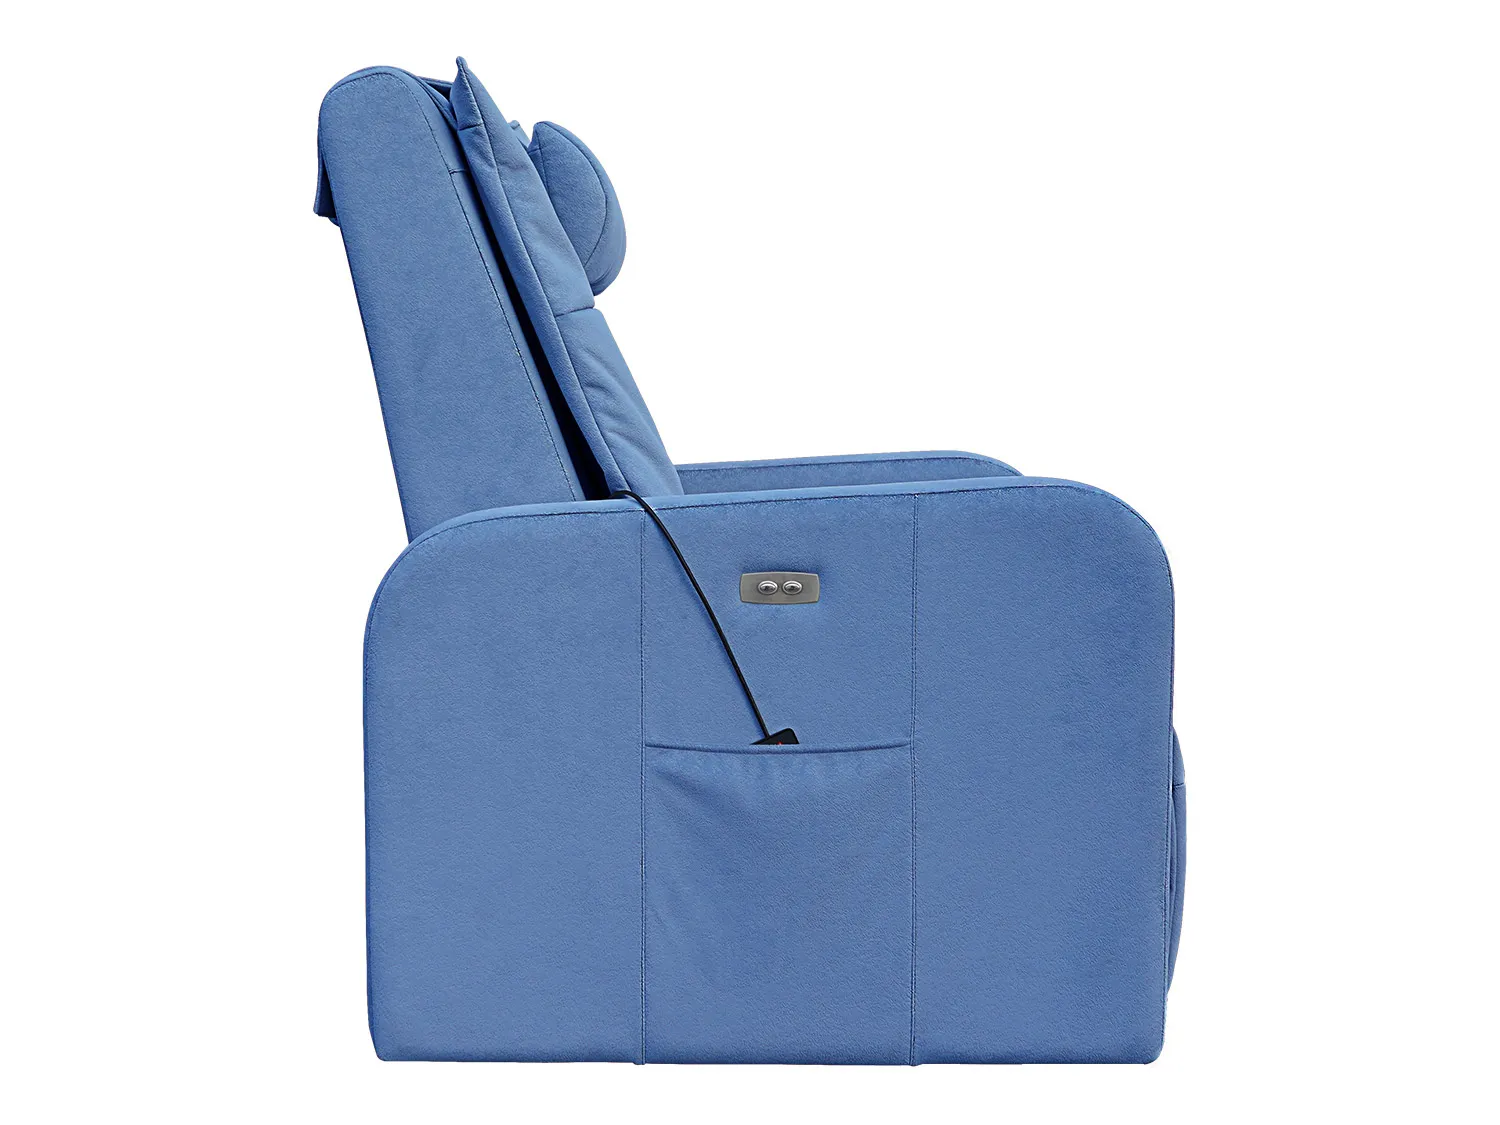 Массажное кресло реклайнер с подъемом FUJIMO LIFT CHAIR F3005 FLFK цвет на заказ - 5 